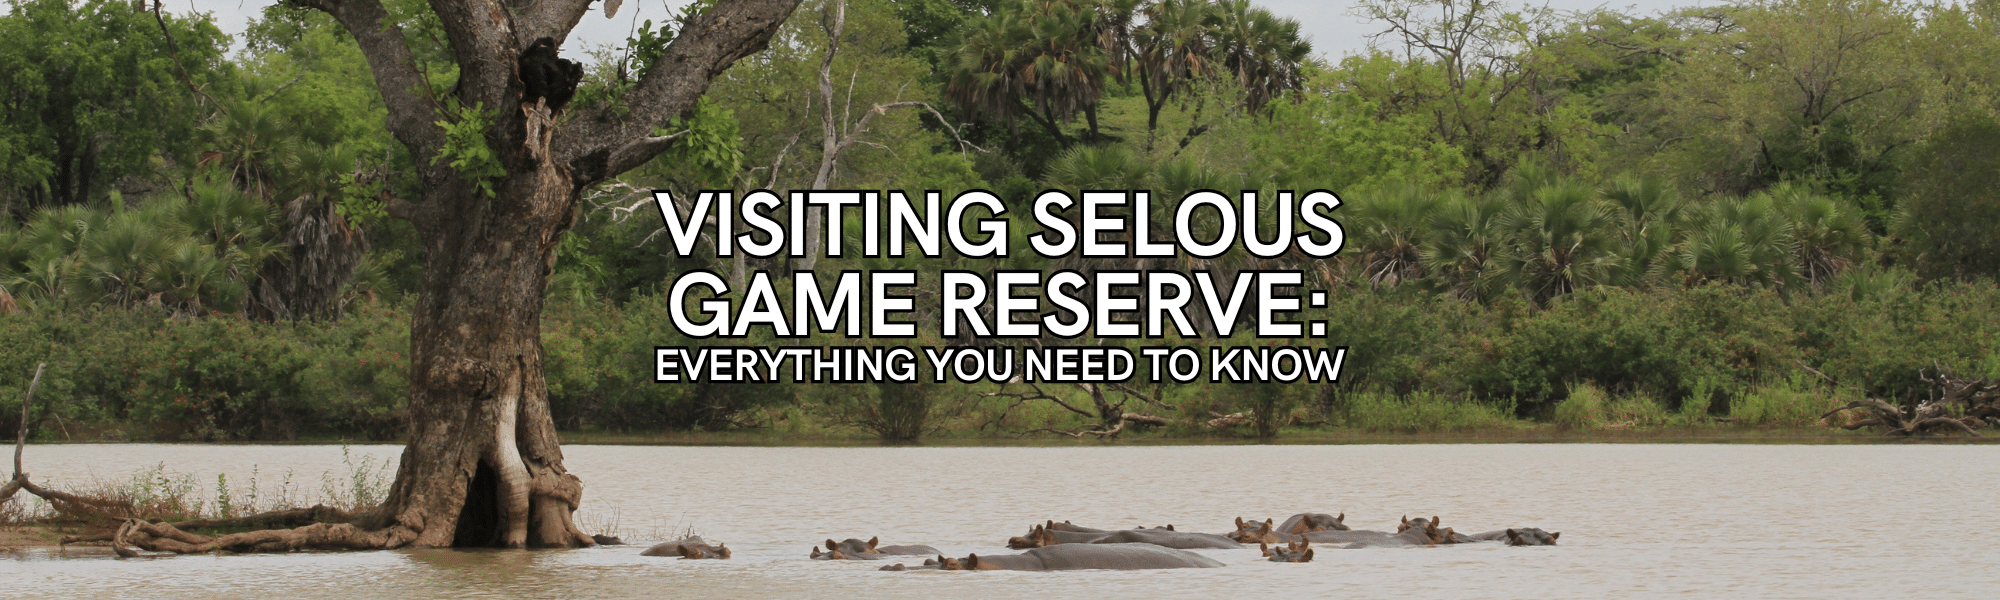 Visiting Selous Game Reserve